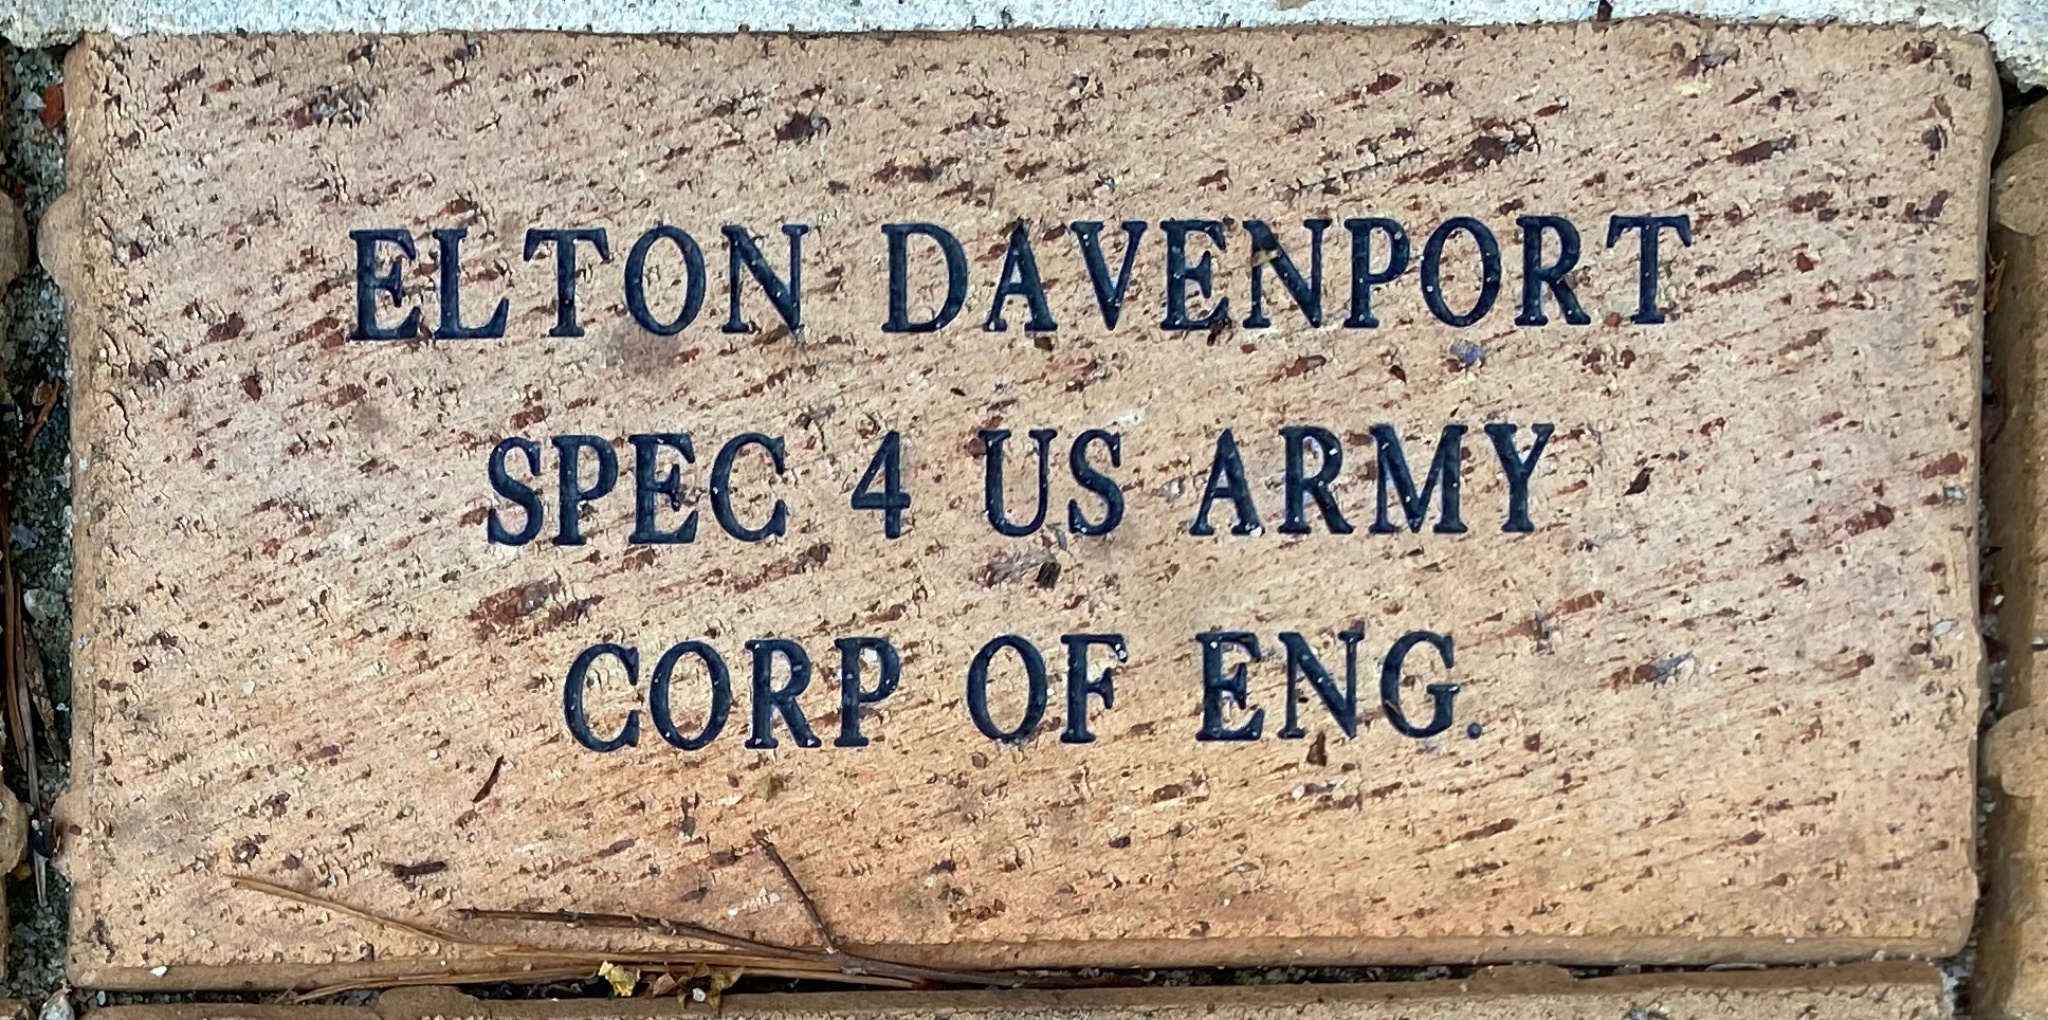 ELTON DAVENPORT SPEC 4 U S ARMY CORP OF ENG.